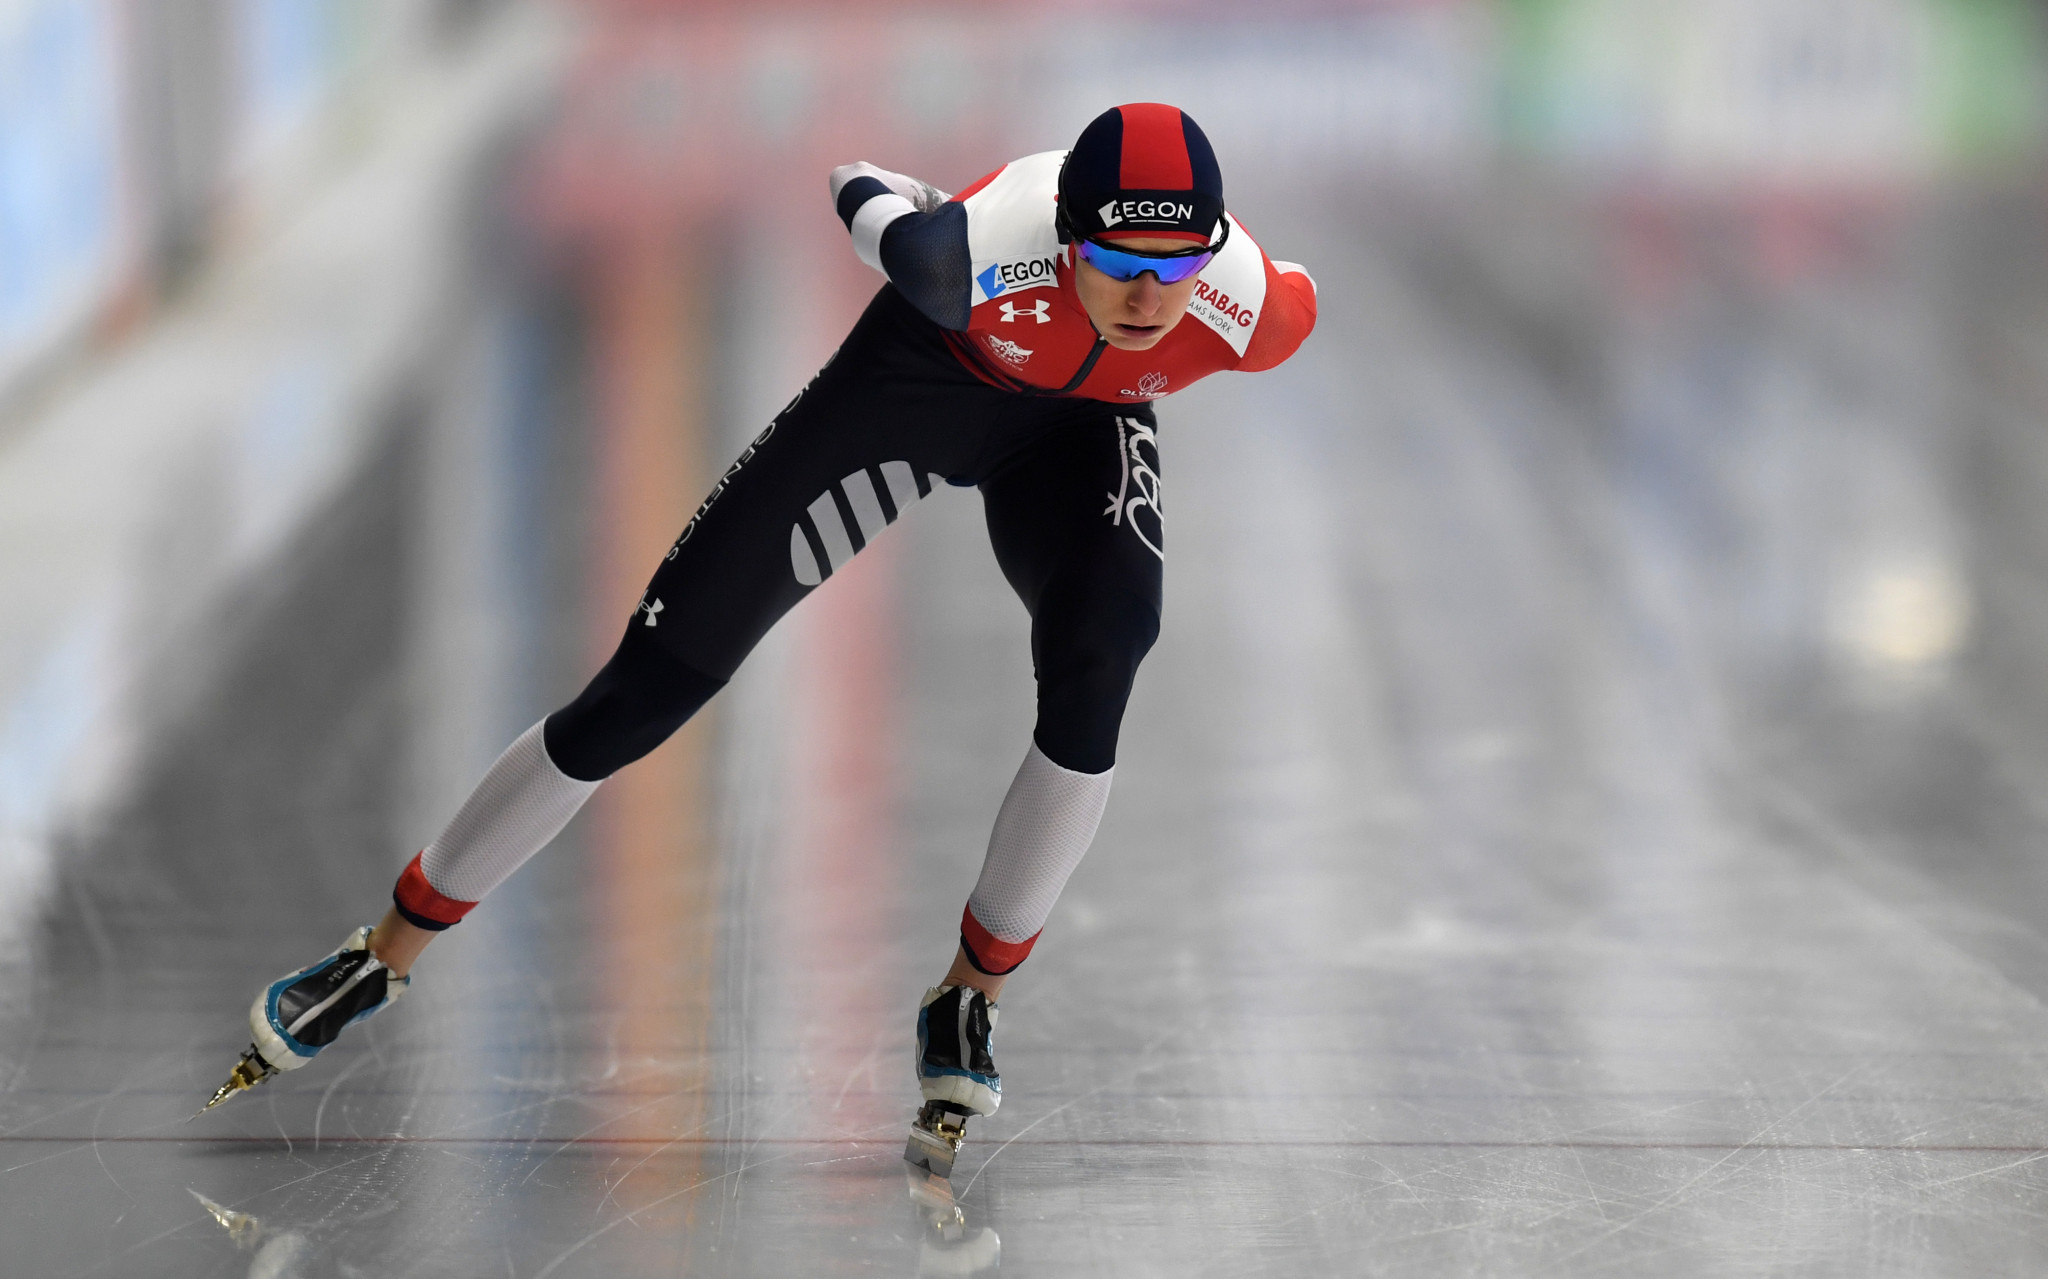 Sáblíková lowers track record at ISU Speed Skating World Cup in Poland